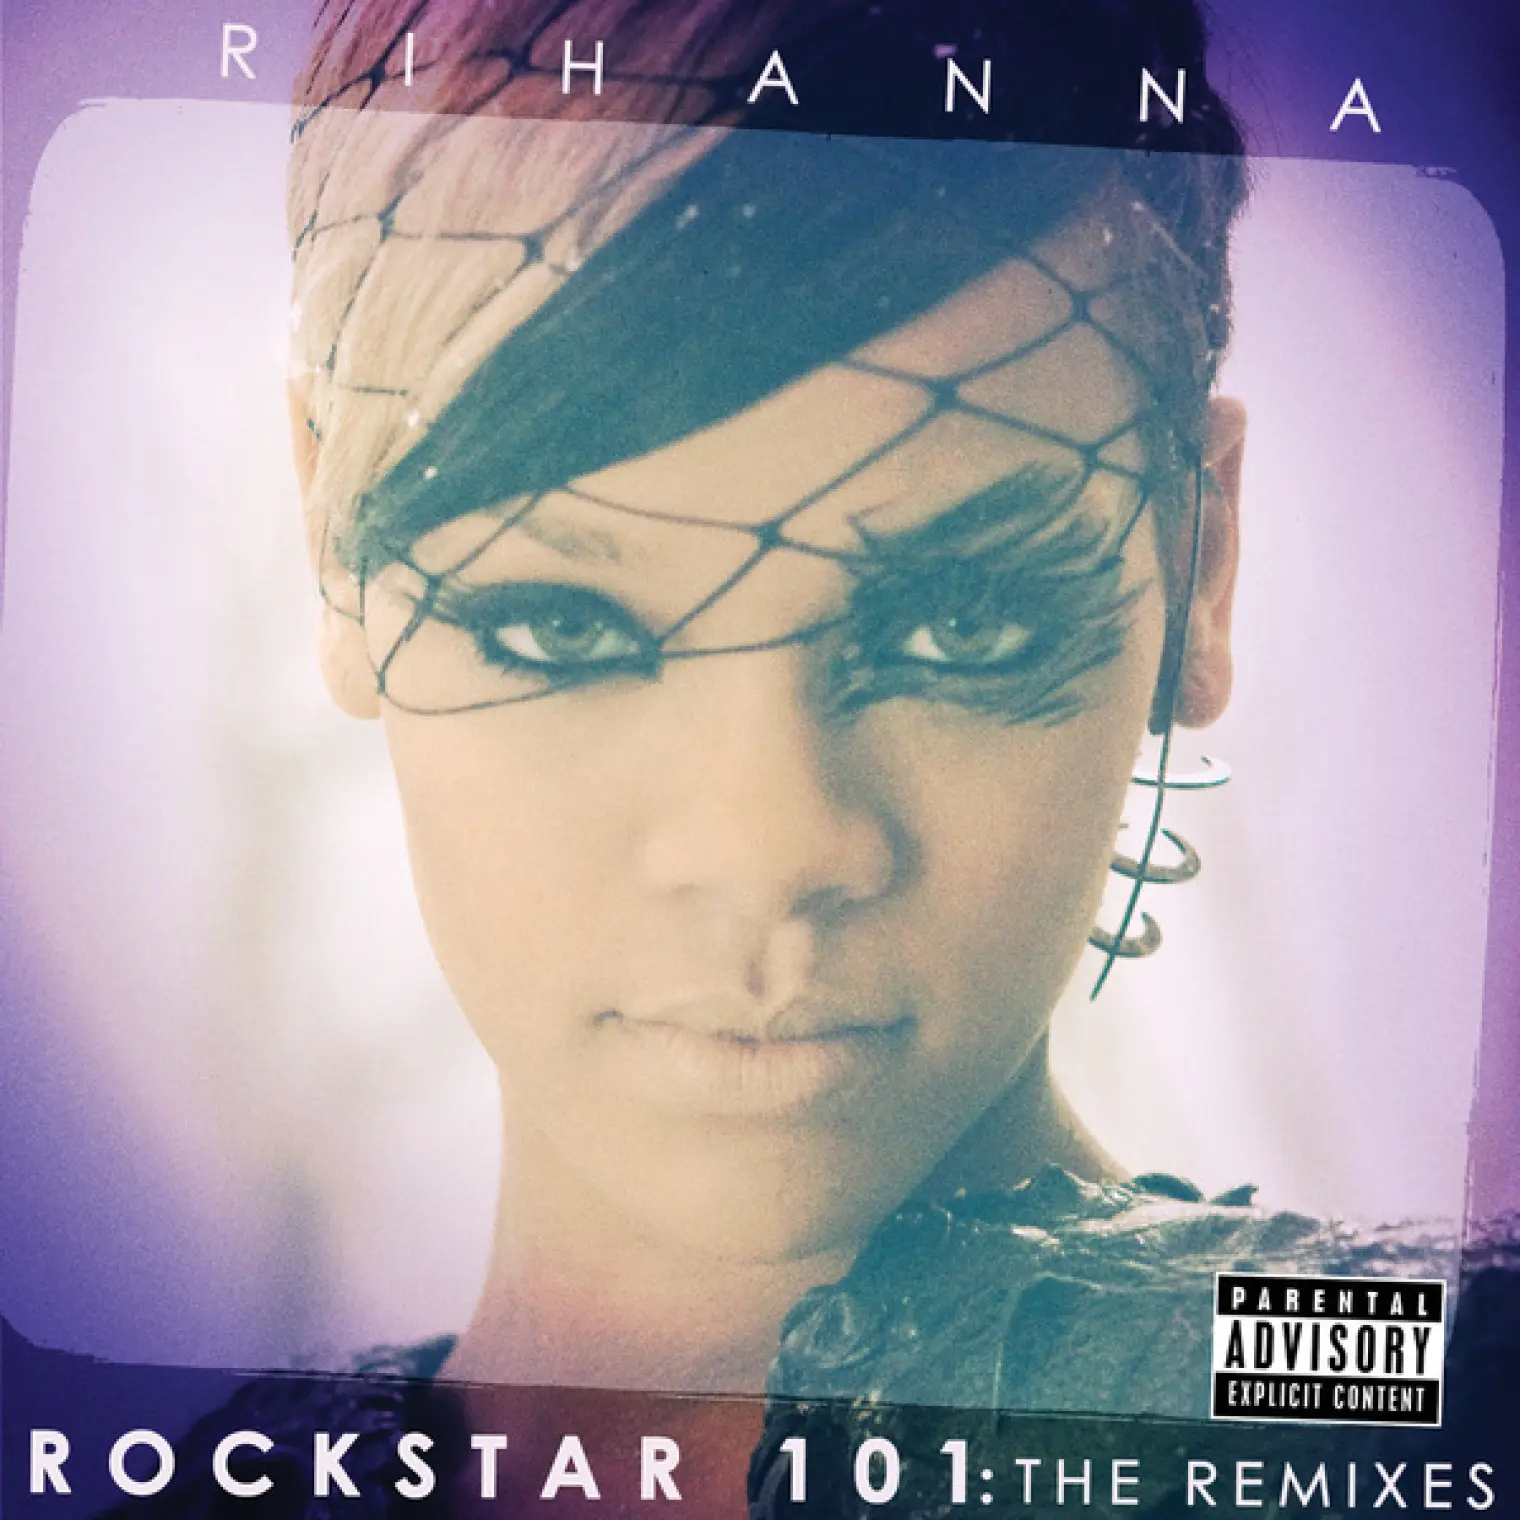 Rockstar 101 The Remixes -  Rihanna 